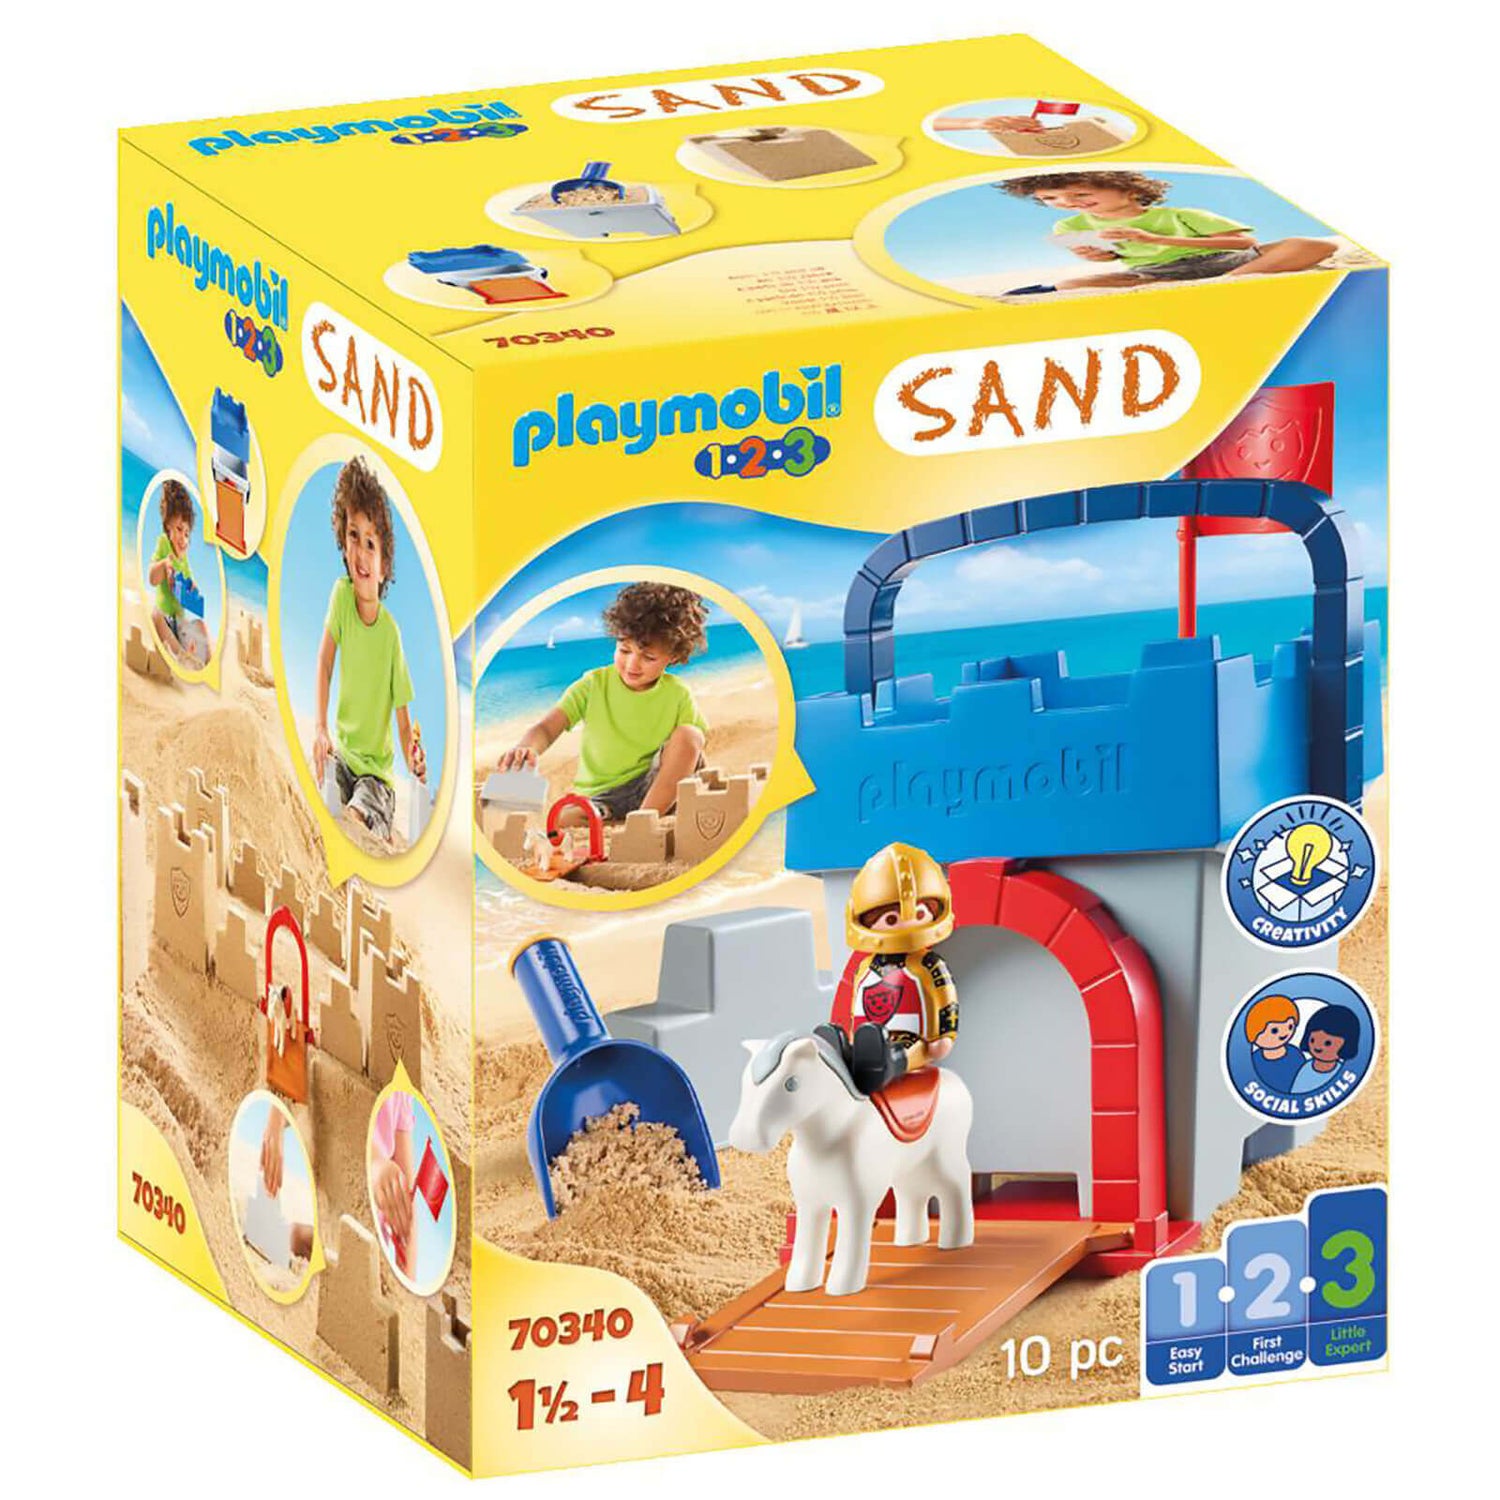 Playmobil SAND Ritterburg Sand Eimer für 18+ Monate (70340)